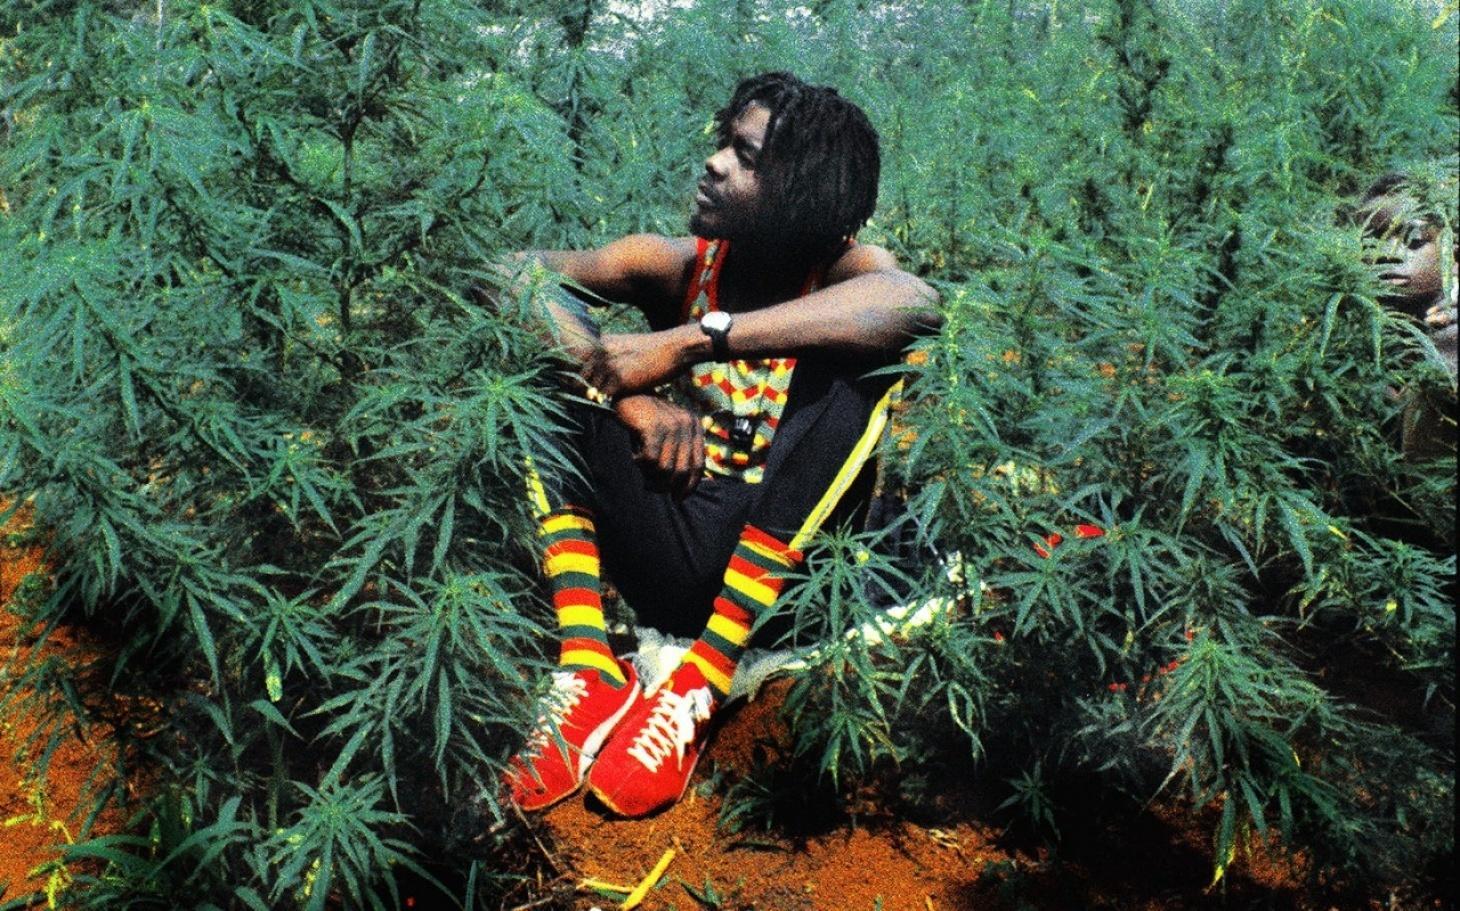 Image of Jamaica Rastafarian setting among marijuana plants